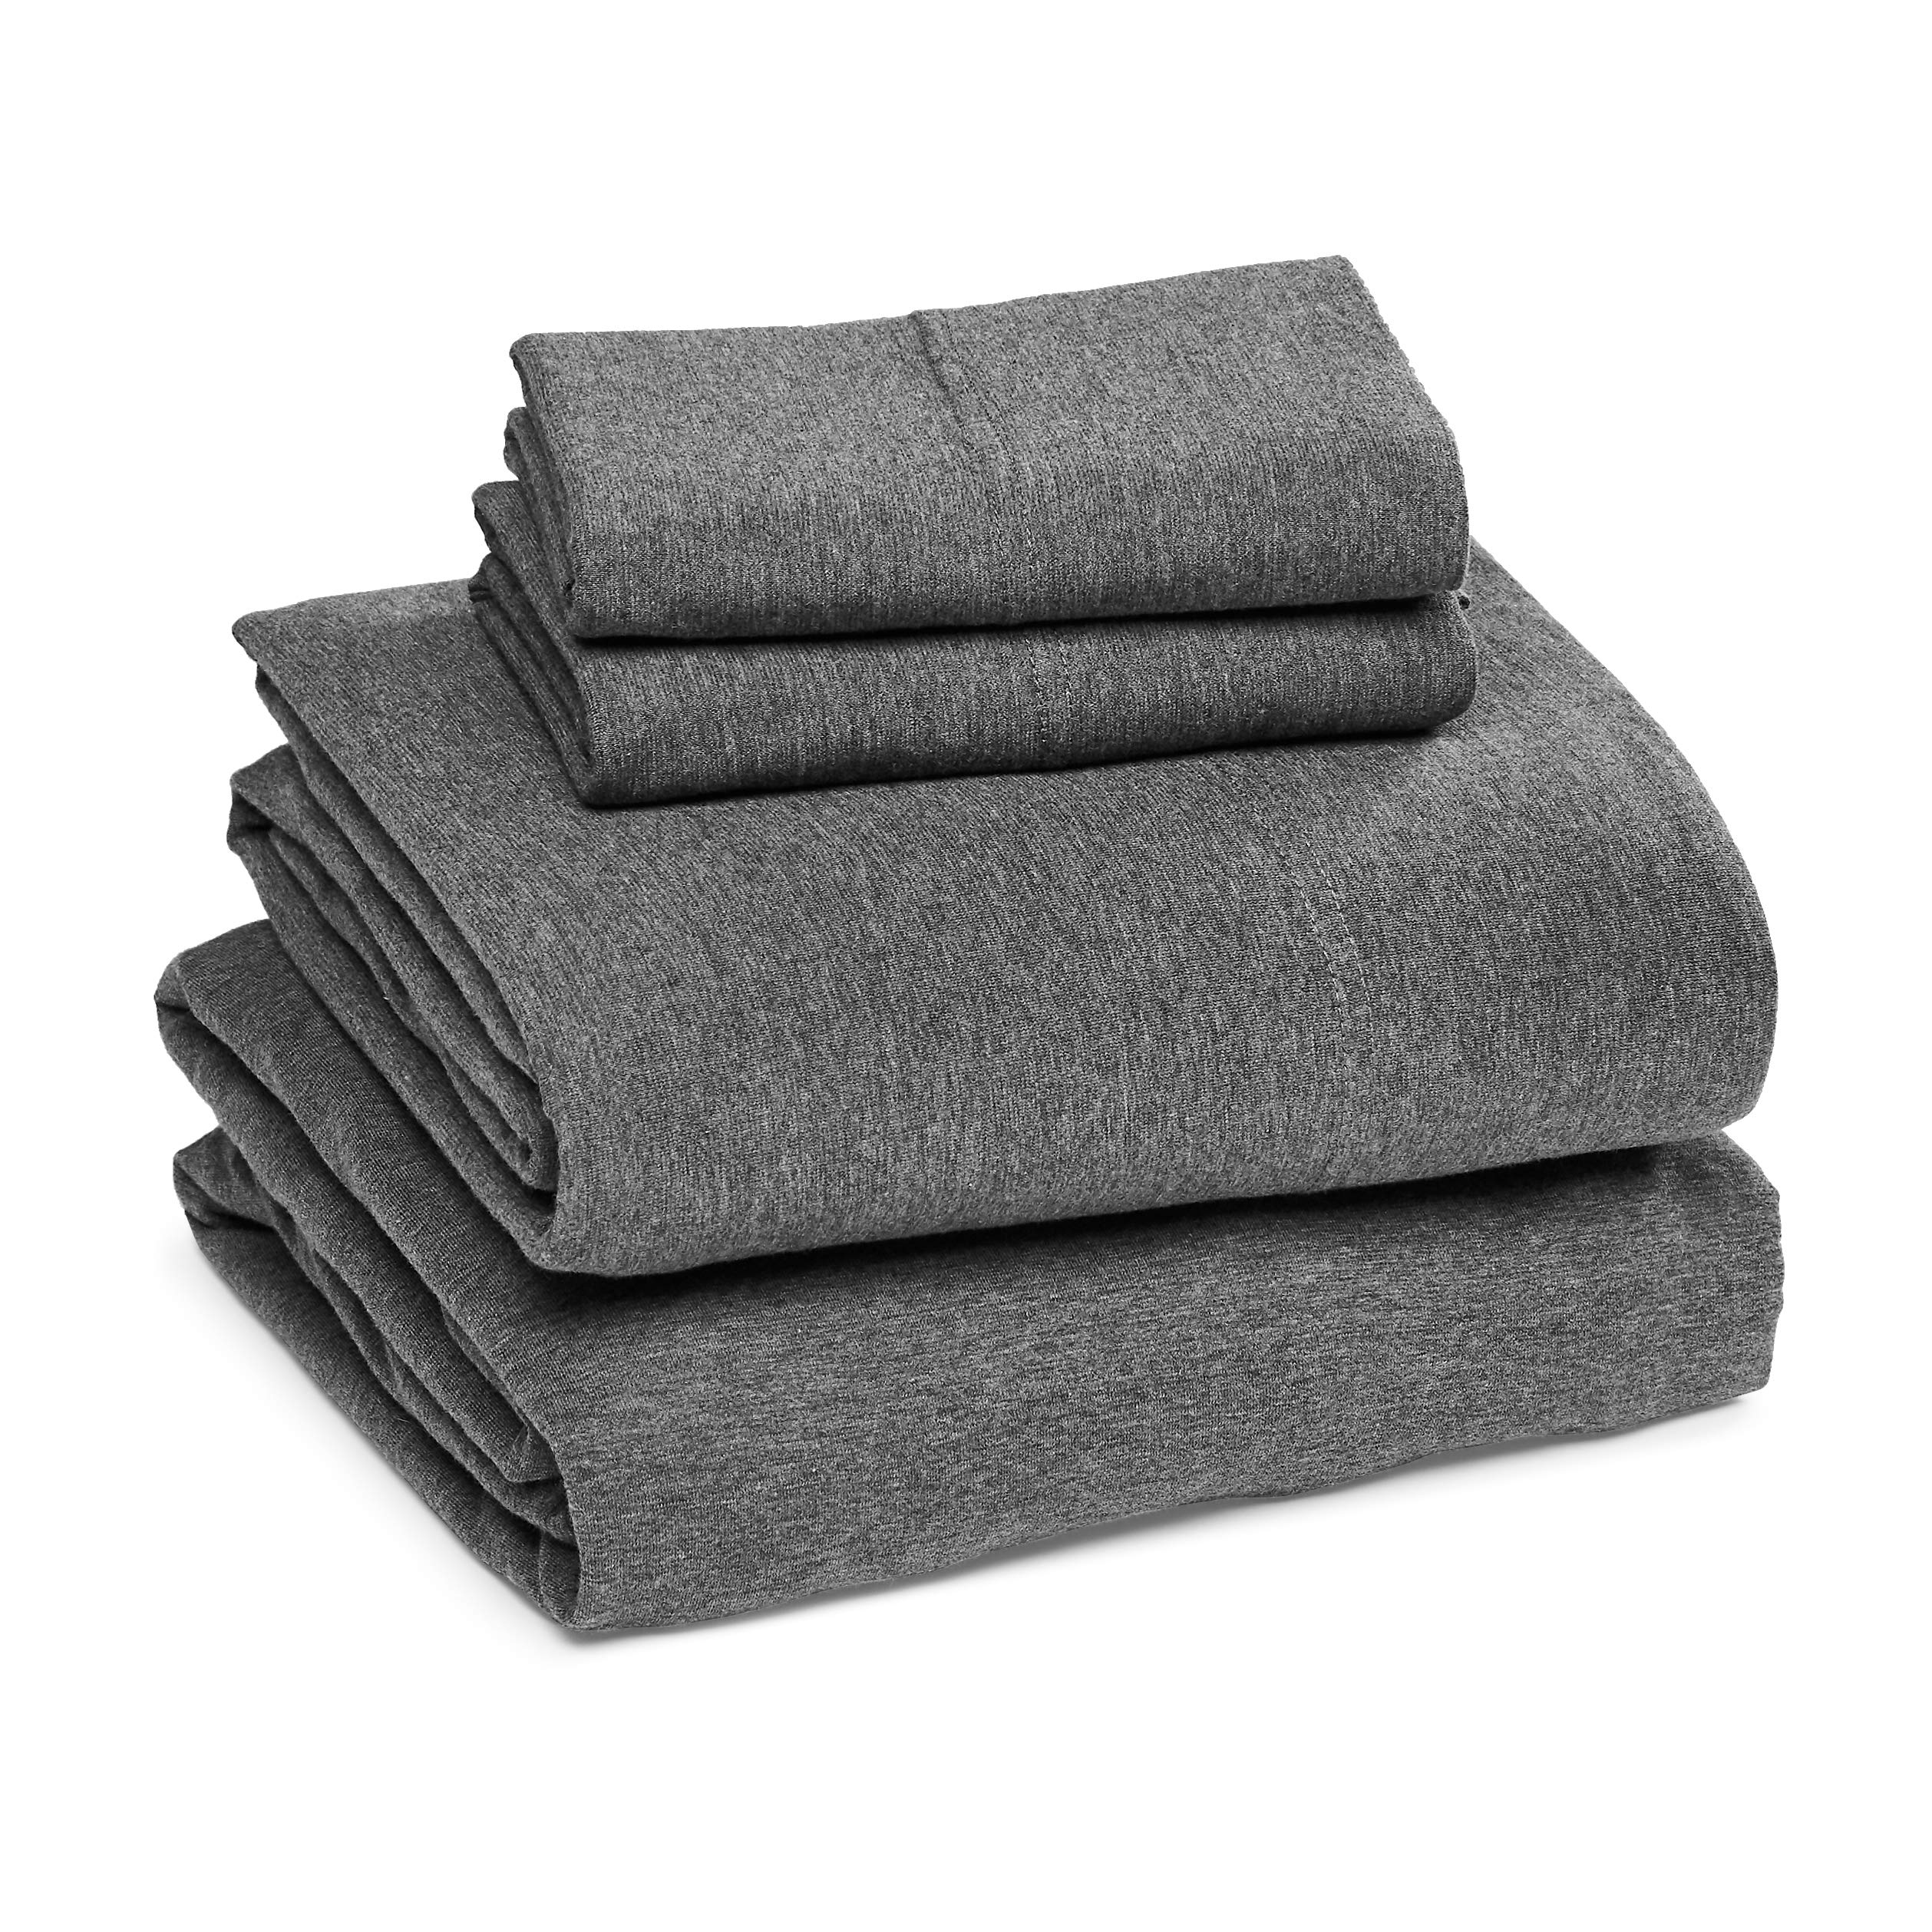 Book Cover Amazon Basics Cotton Jersey 4 Piece Bed Sheet Set, King, Dark Gray, Solid Dark Gray King Sheet Set